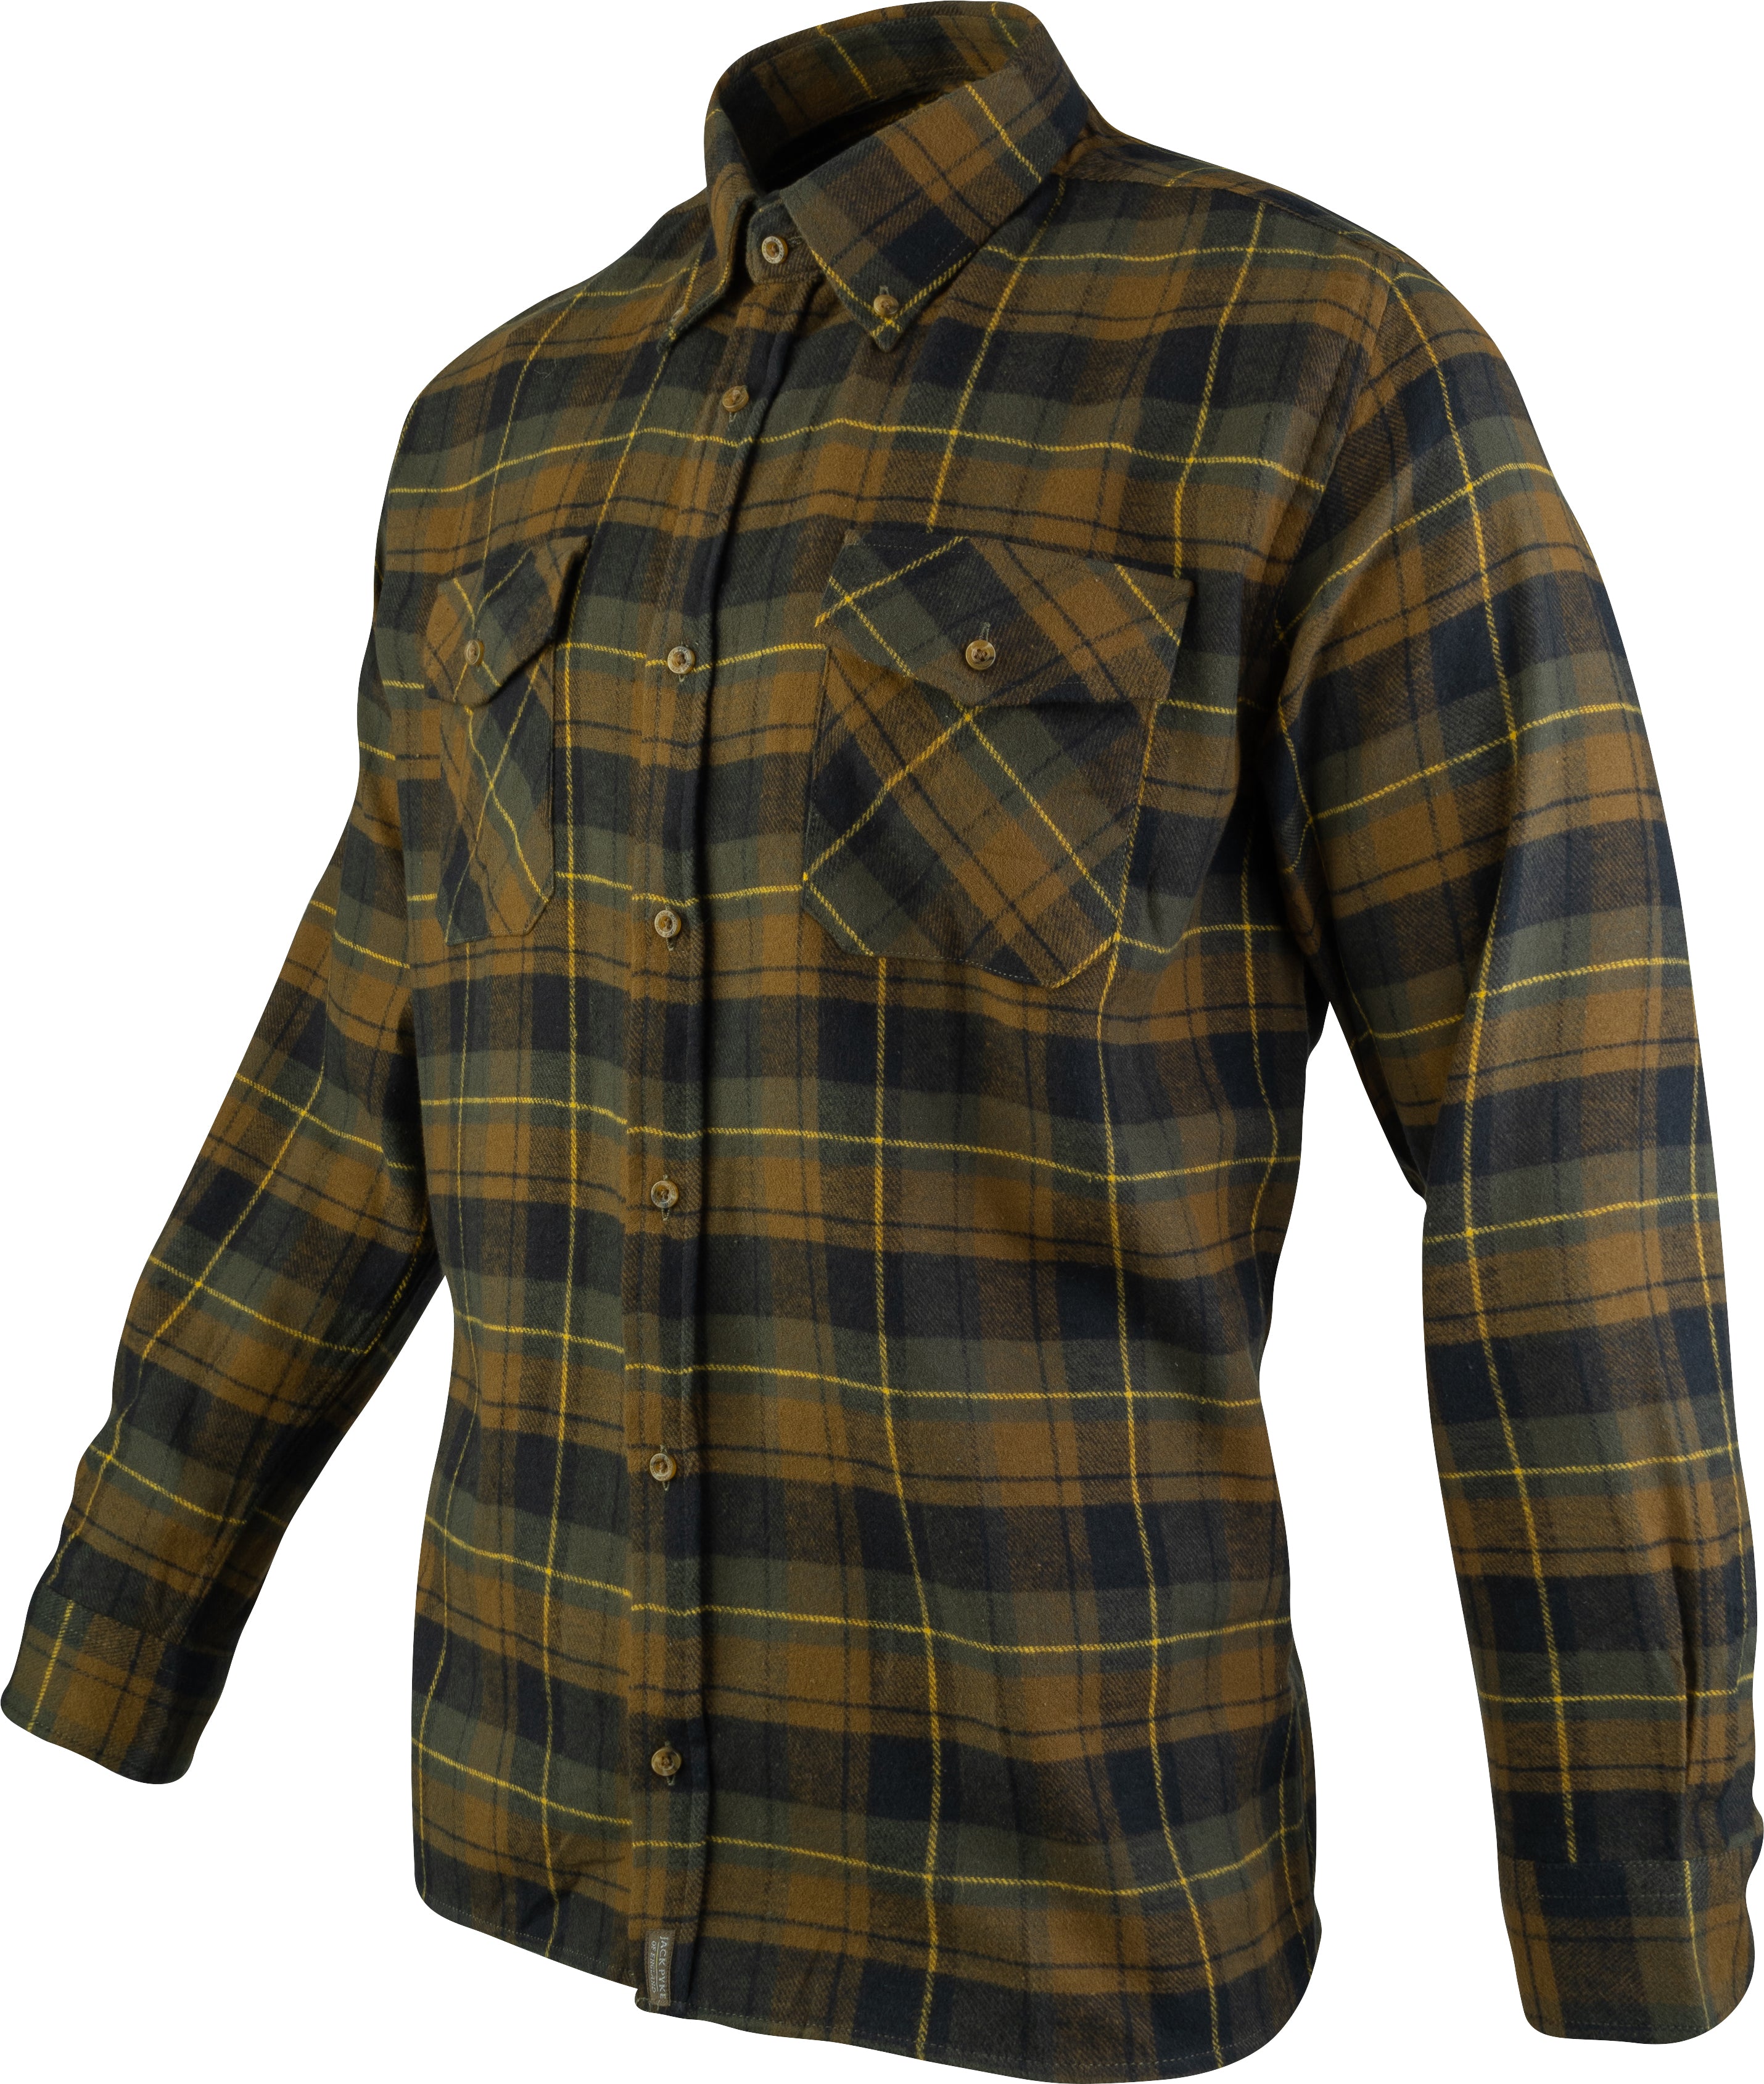 Jack Pyke Flannel Shirt in Brown